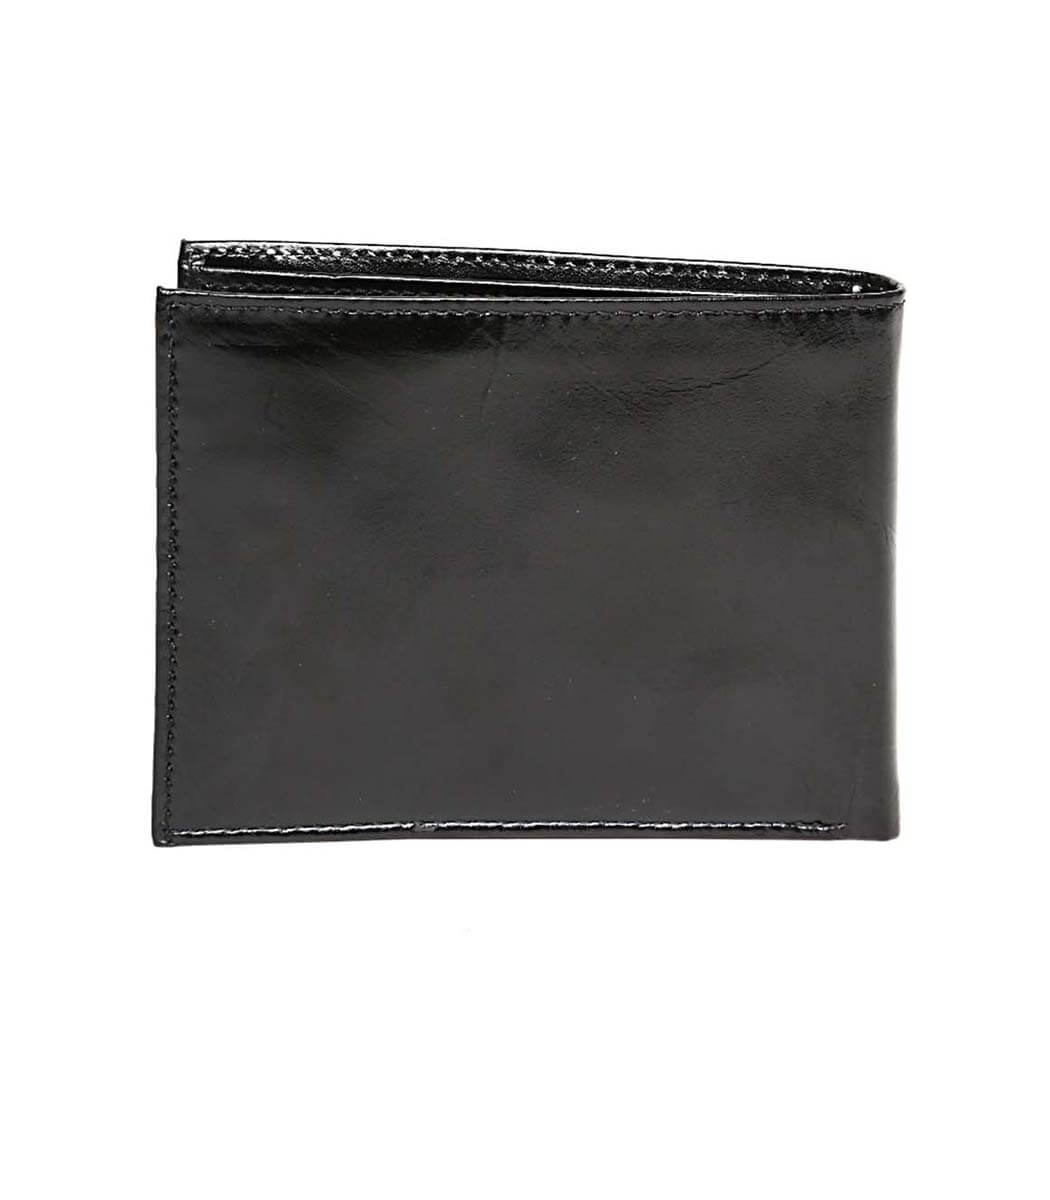 Buy Online Black Leather Wallet